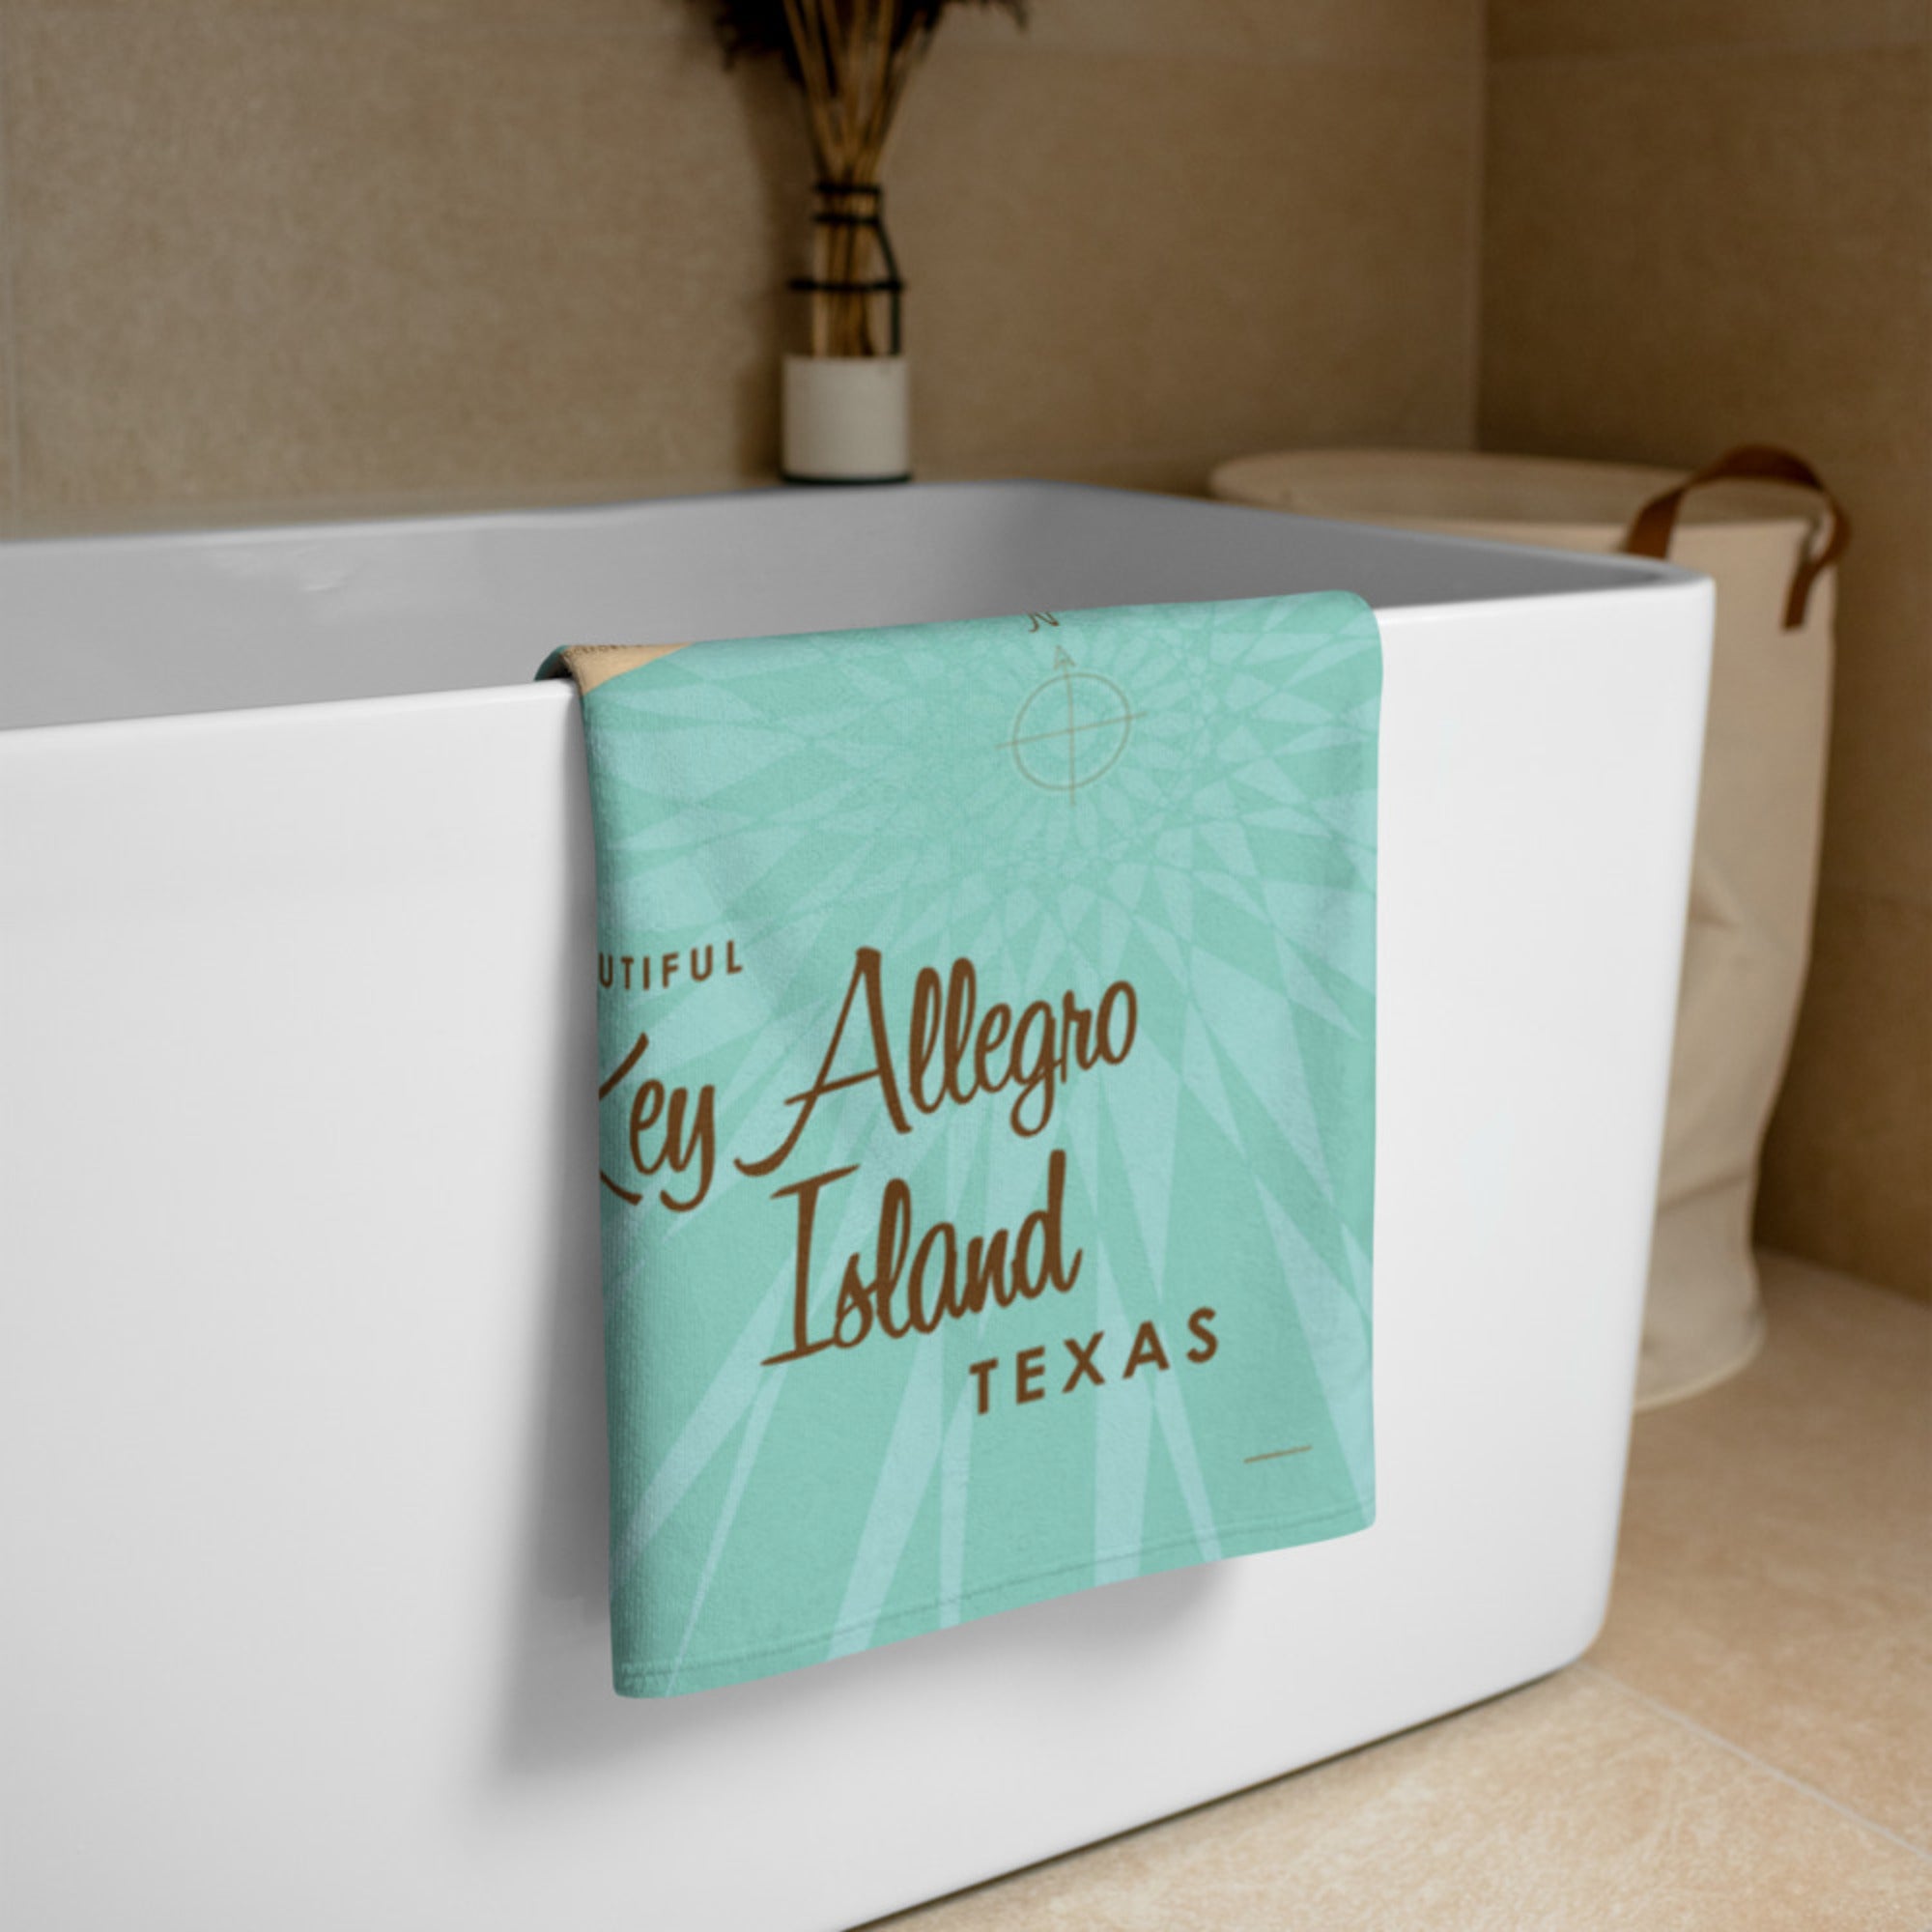 Key Allegro Island Texas Beach Towel